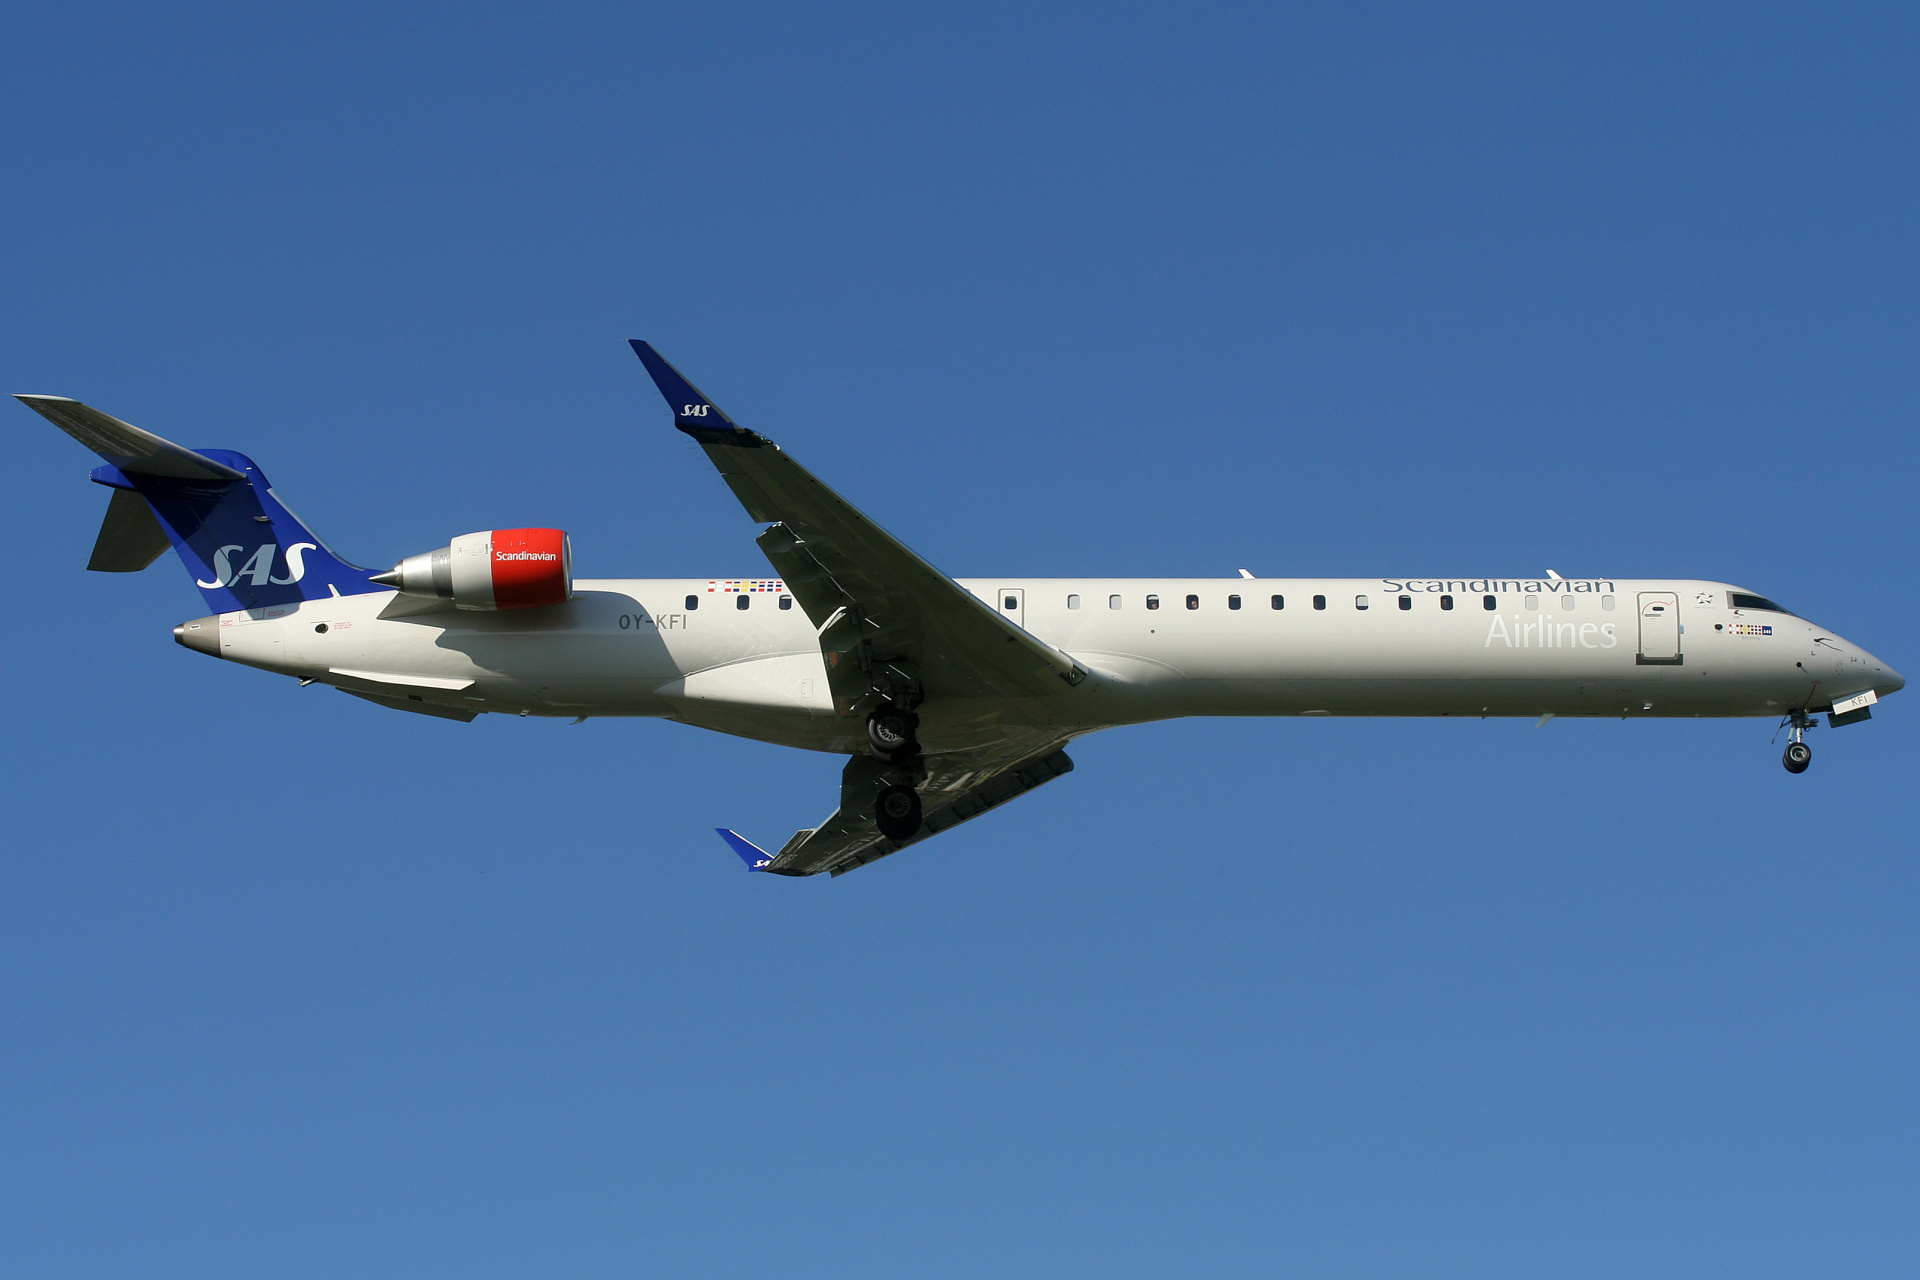 OY-KFI (Aircraft » EPWA Spotting » Mitsubishi Regional Jet » CRJ-900 » SAS Scandinavian Airlines)